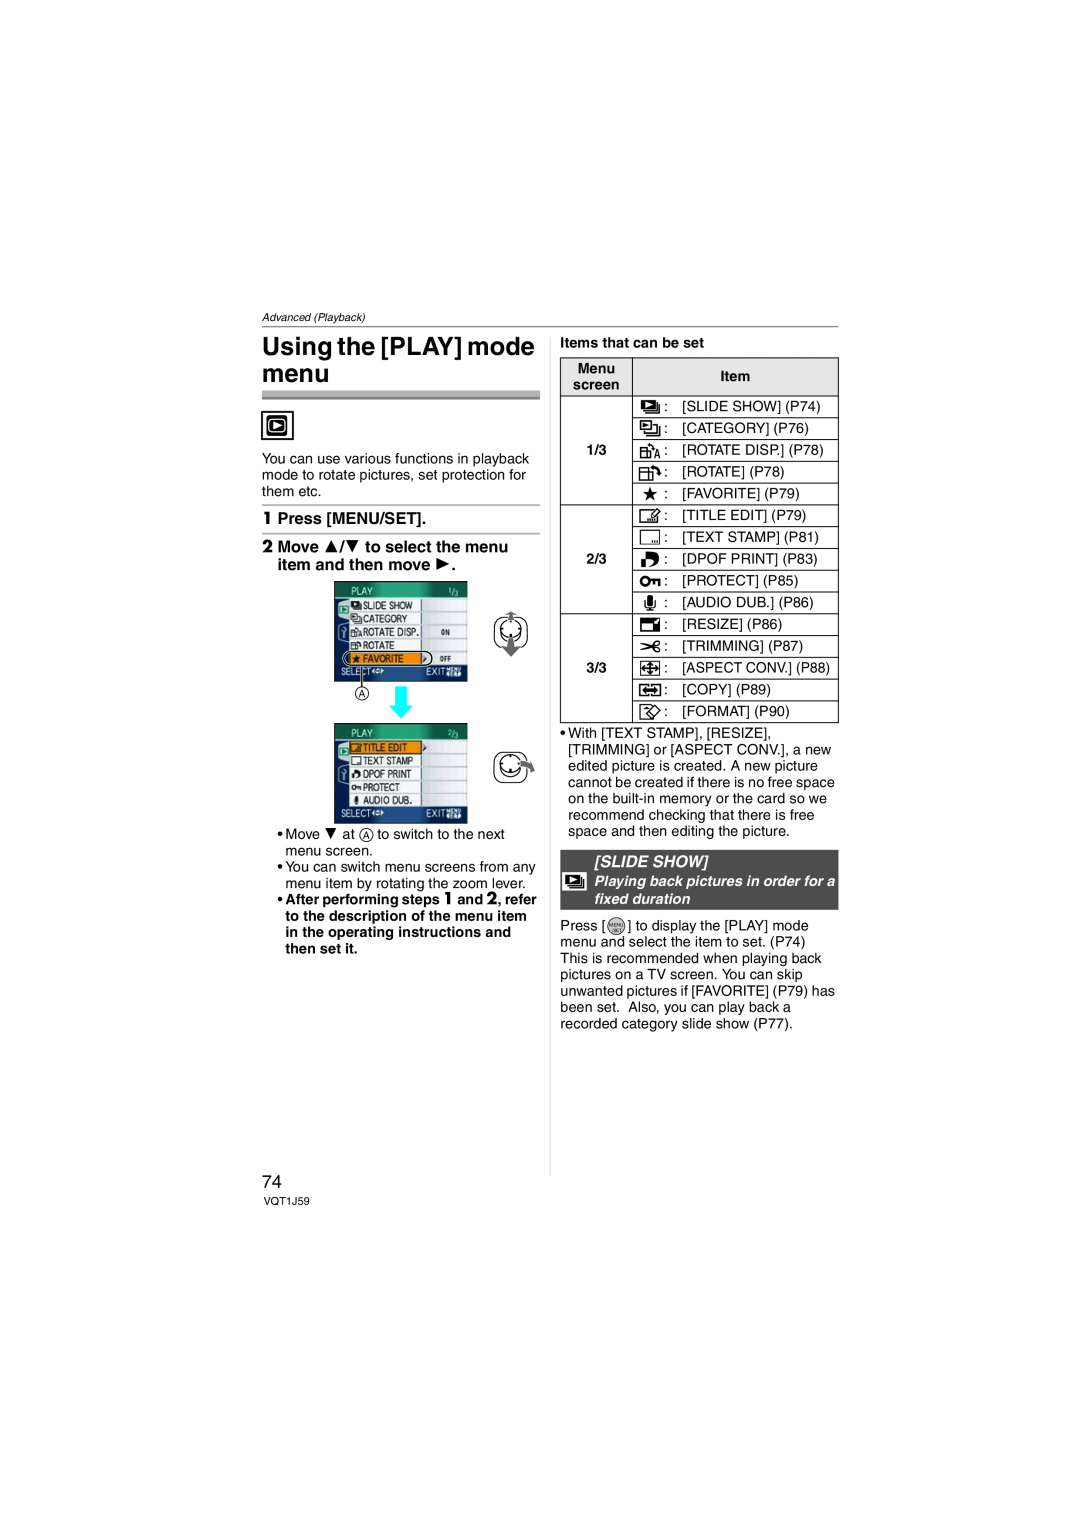 Panasonic DMC-FX55 Using the PLAY mode menu, Press MENU/SET 2 Move 3/4 to select the menu item and then move, Slide Show 